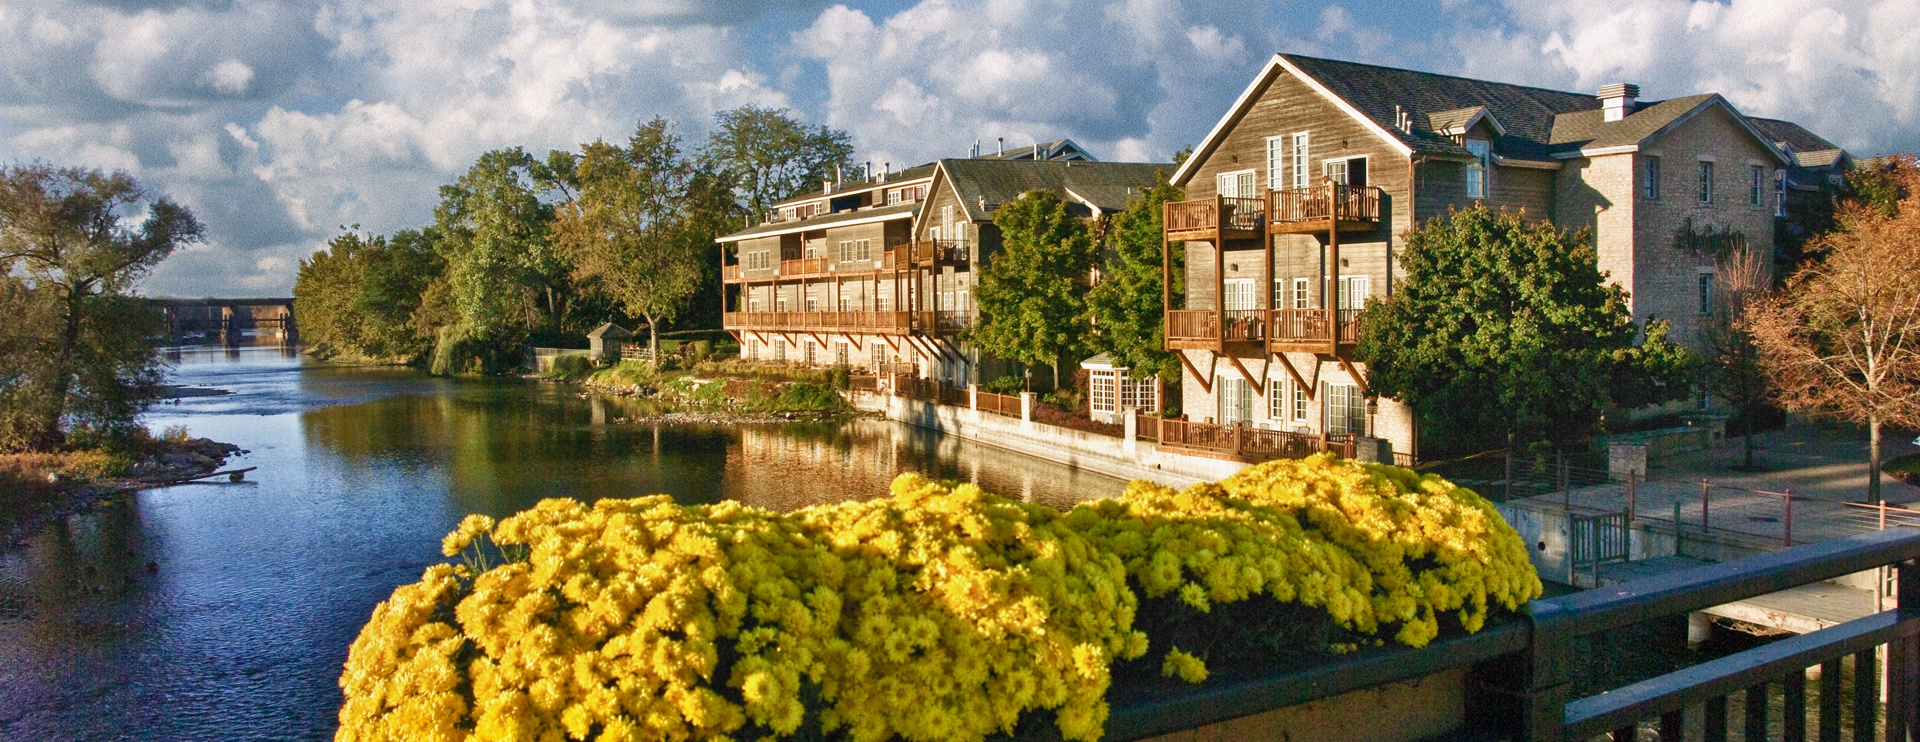 Photo of The Herrington Inn & Spa overlooking the Fox River in Geneva, IL